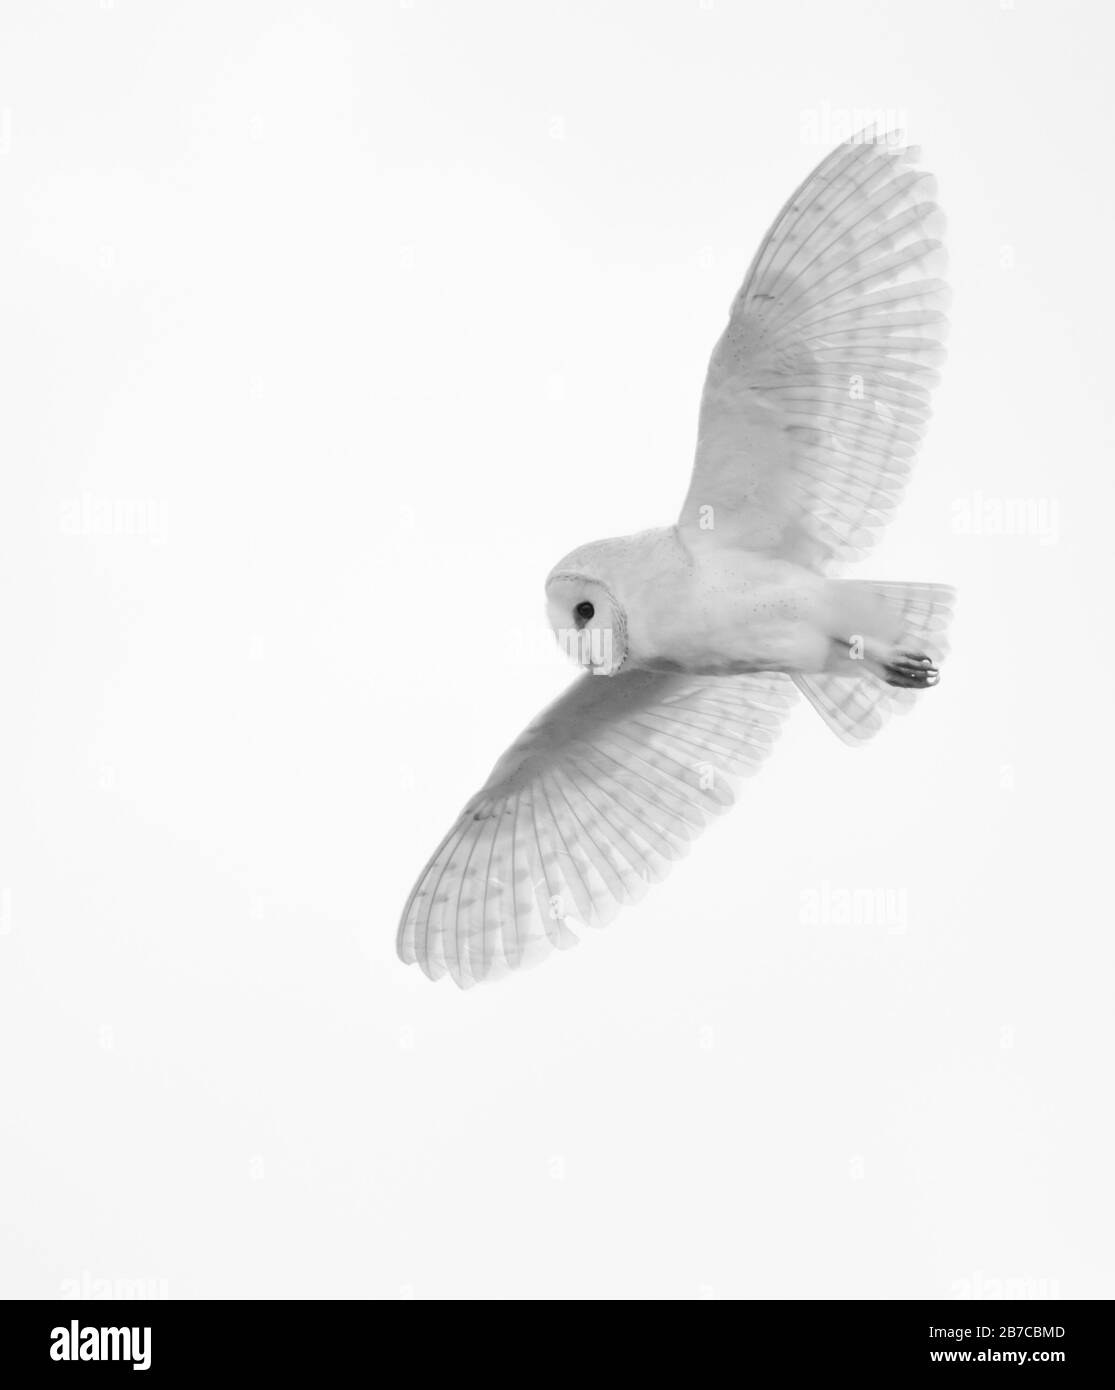 Barn owl flying in York, England, UK Stock Photo